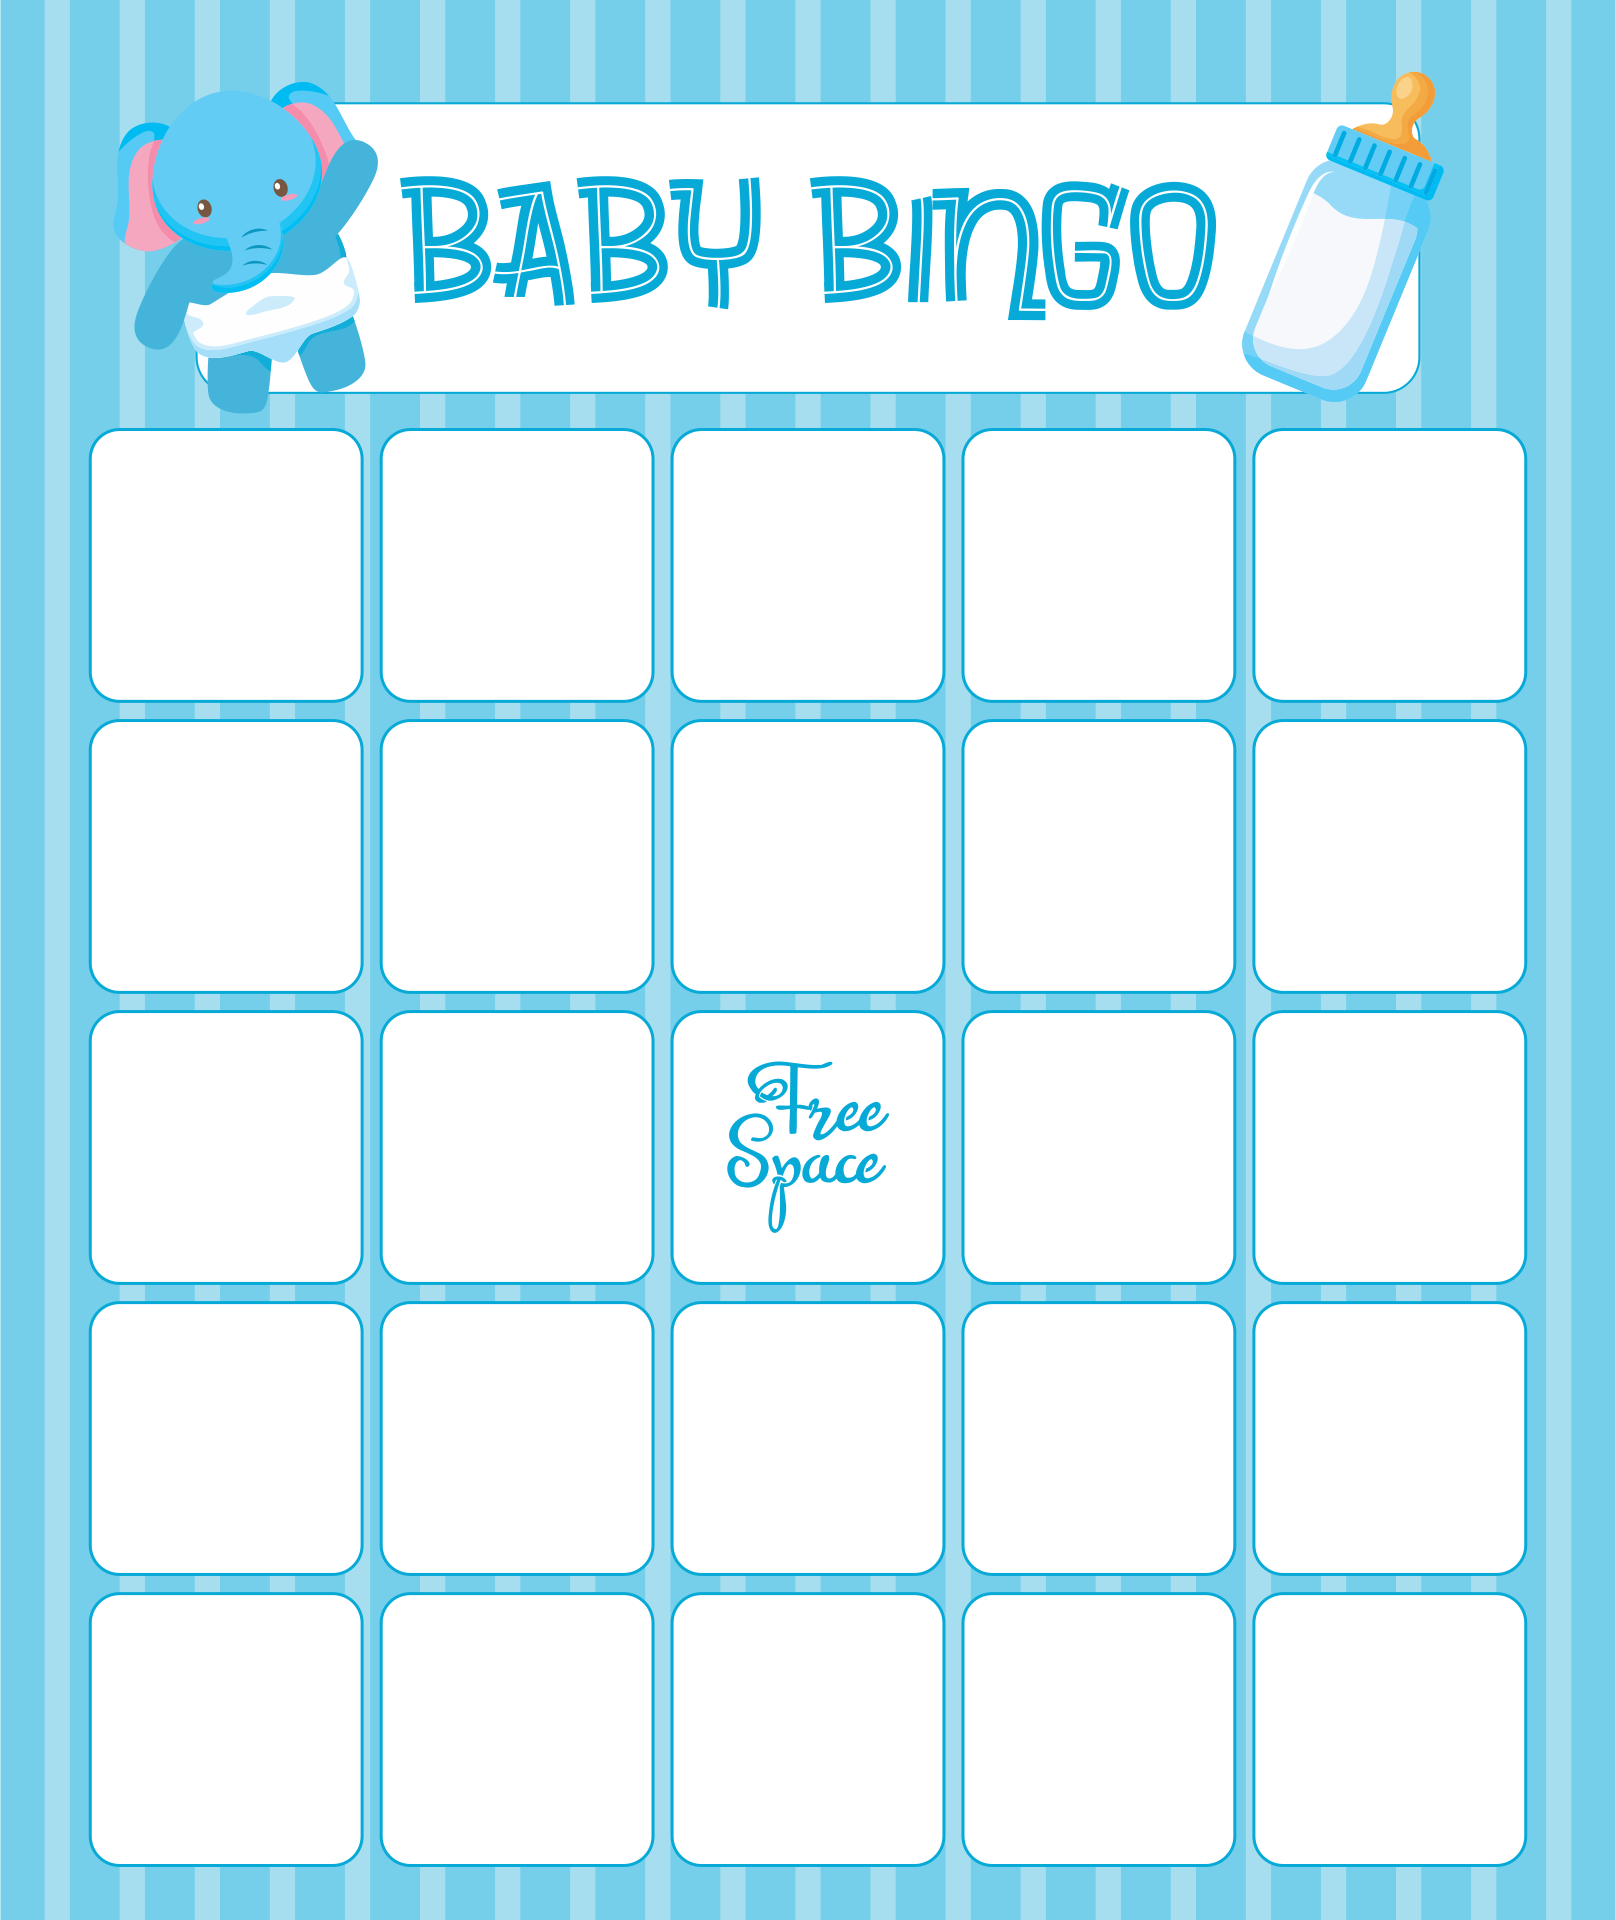 Play Bingo Online For Free